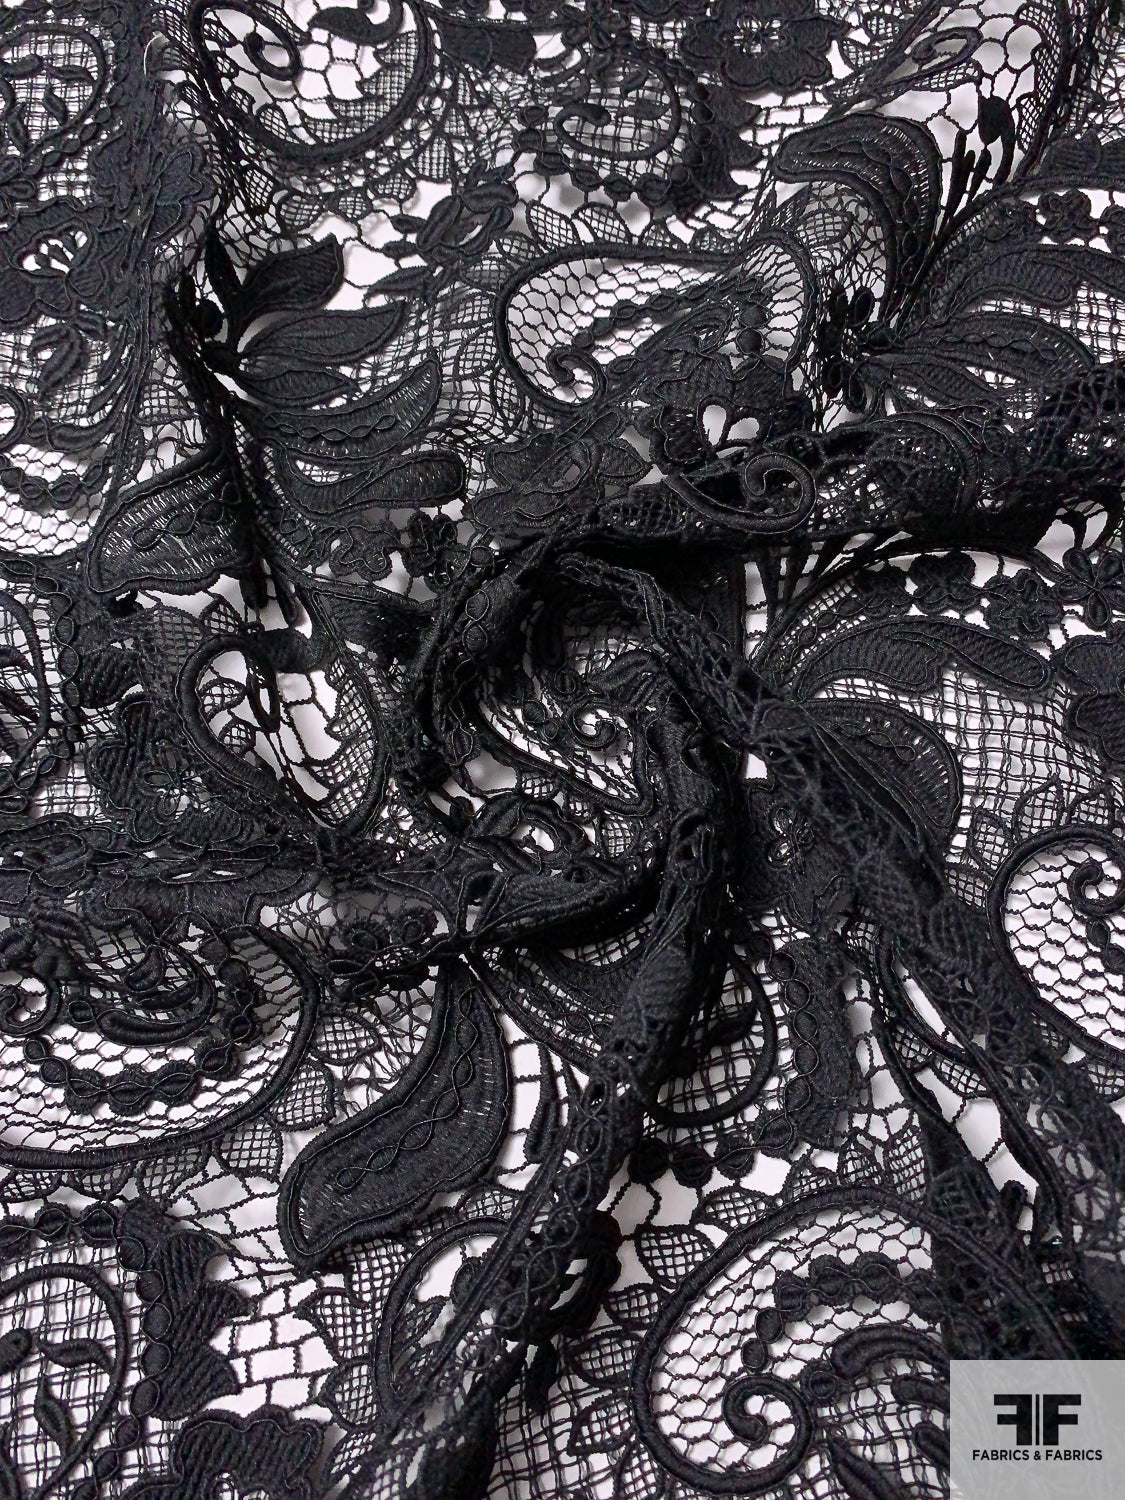 Paisley Floral Stretch Lace - Black